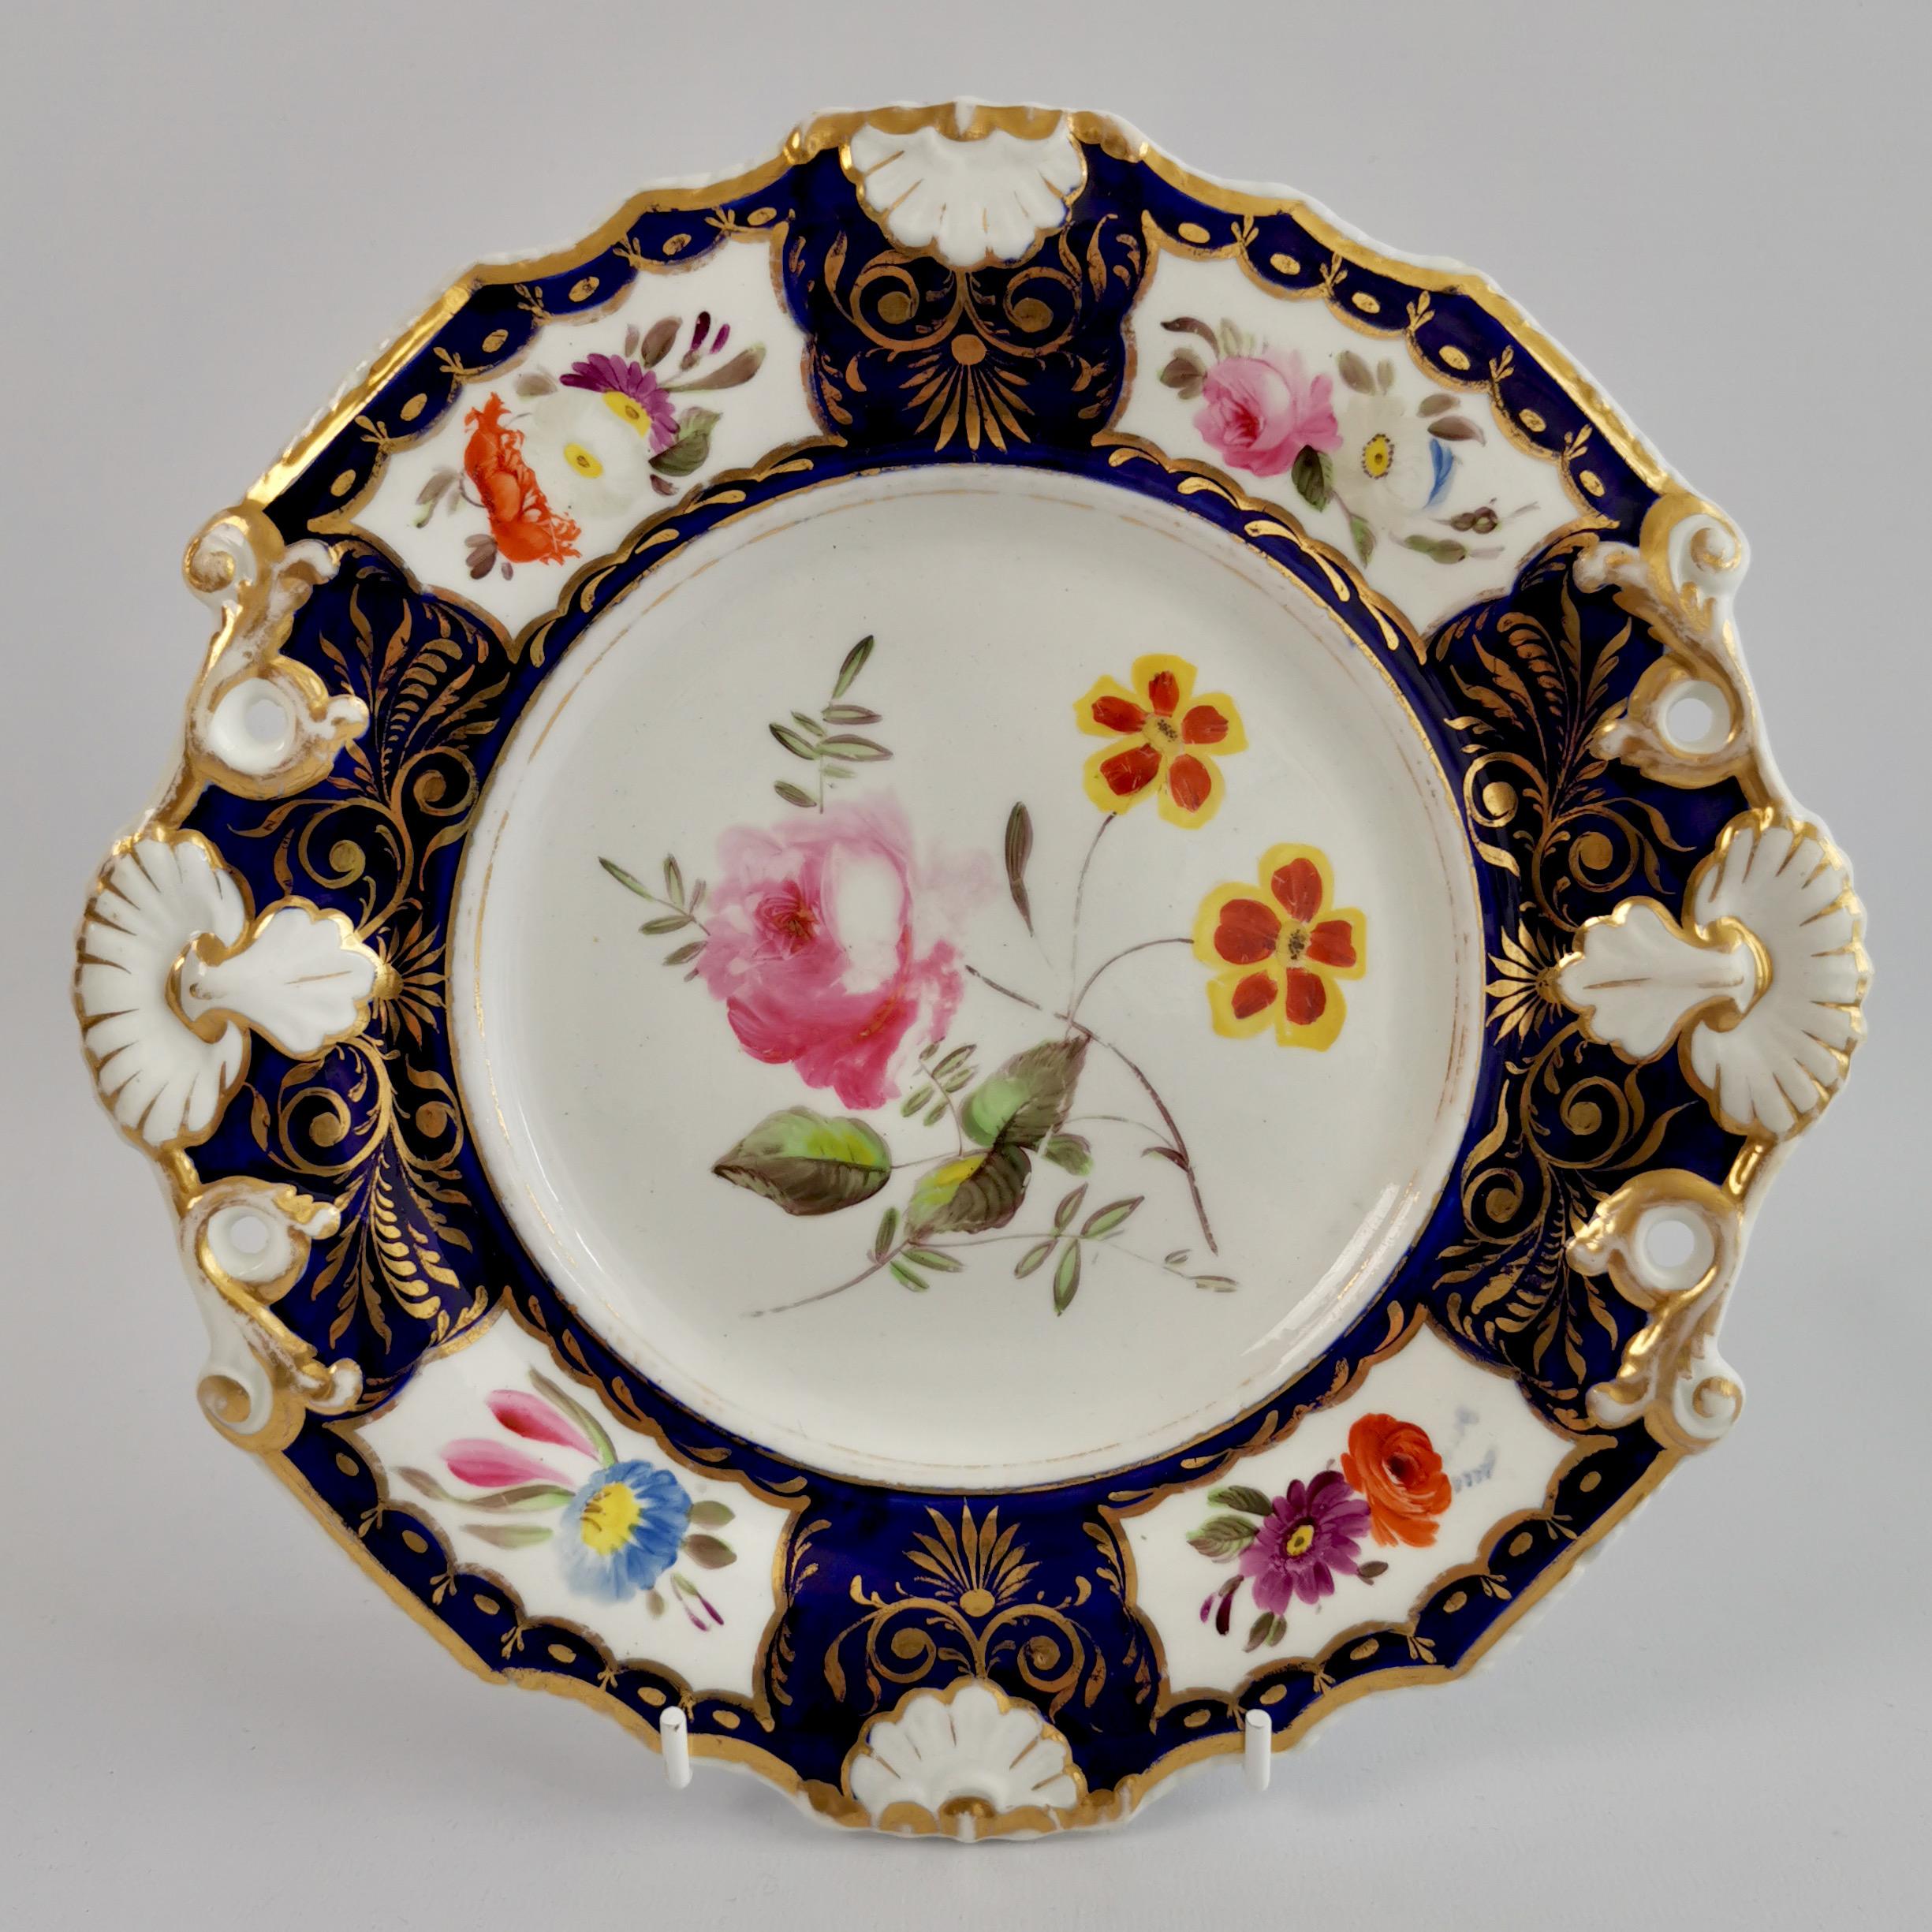 Early 19th Century New Hall Porcelain Part Dessert Service, Cobalt Blue, Flowers, Regency 1824-1830